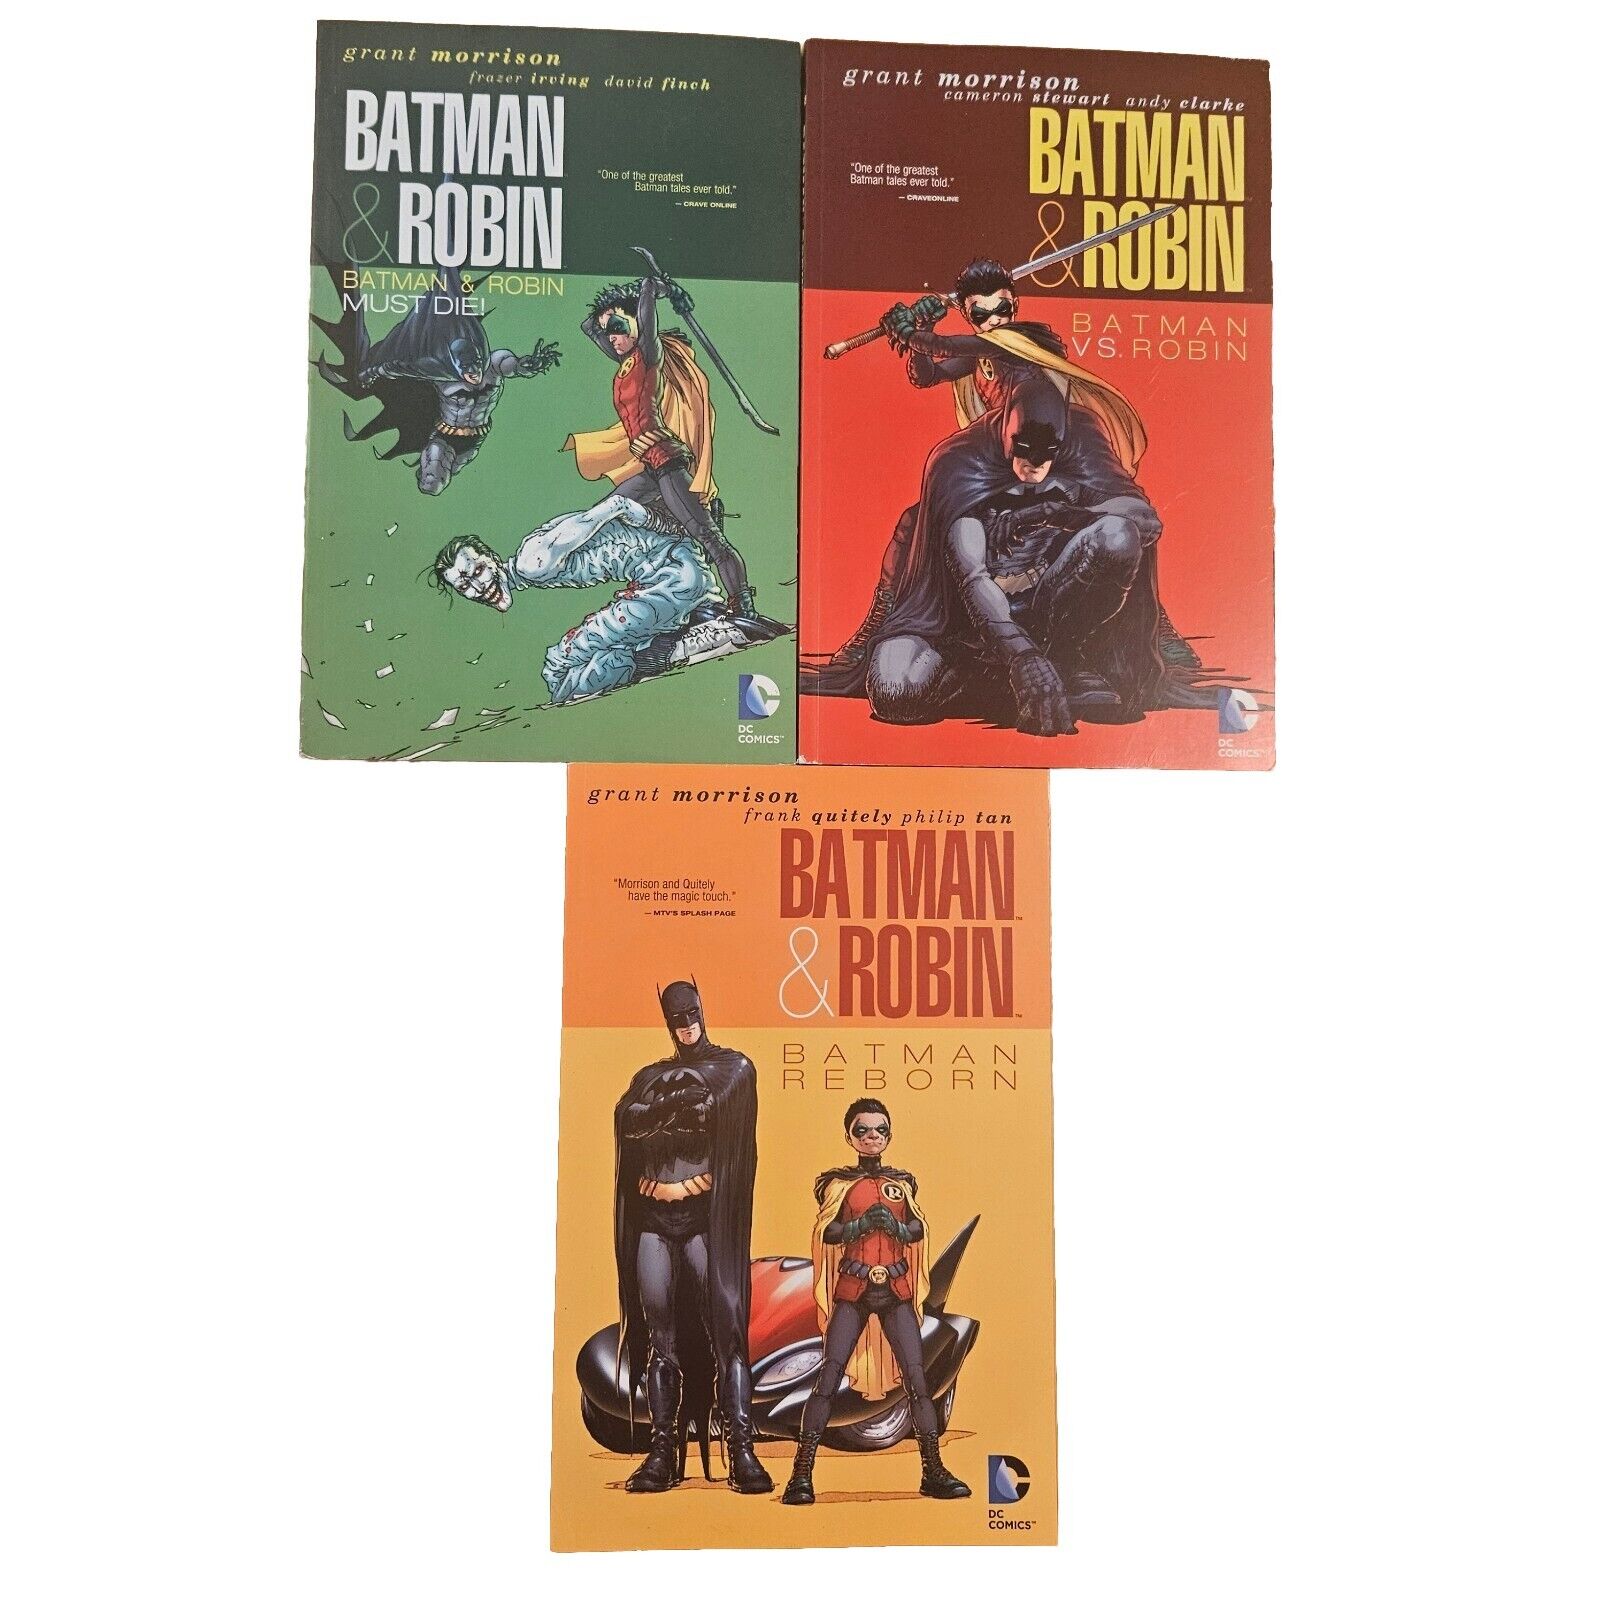 Batman & Robin By Grant Morrison Vol. 1-3  Lot Of 3 TPBs Must Die Reborn VS